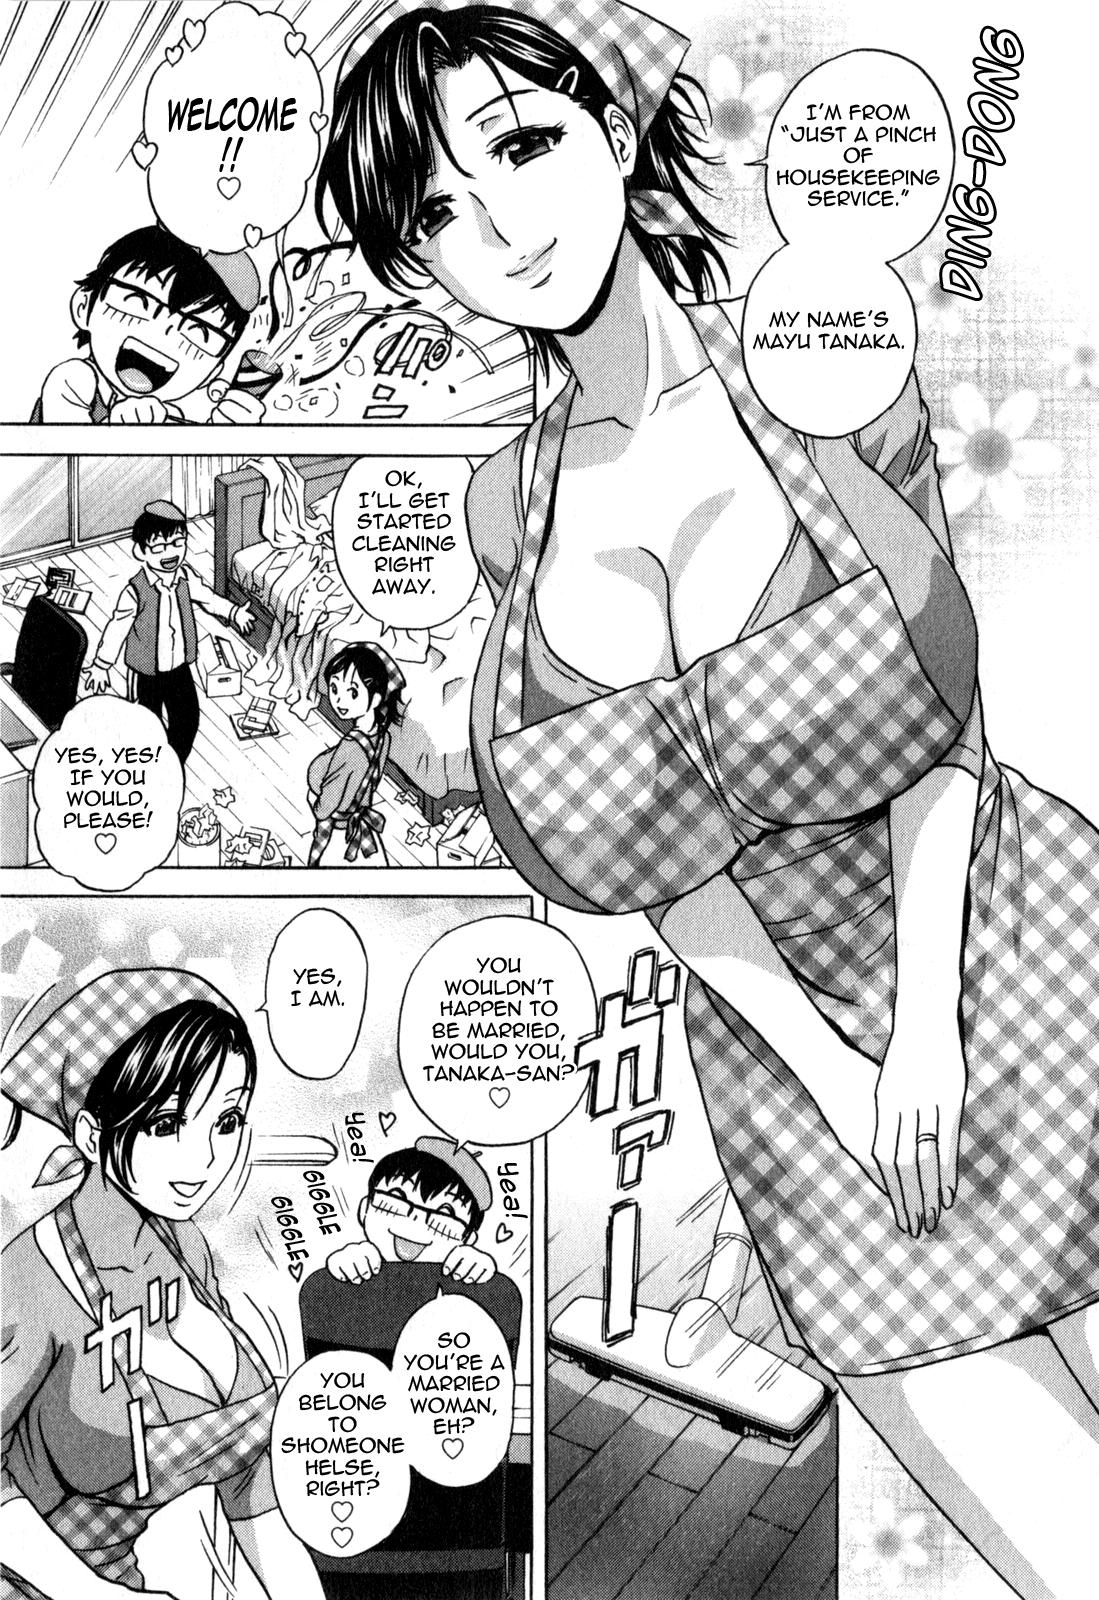 Life with Married Women Just Like a Manga 3 70